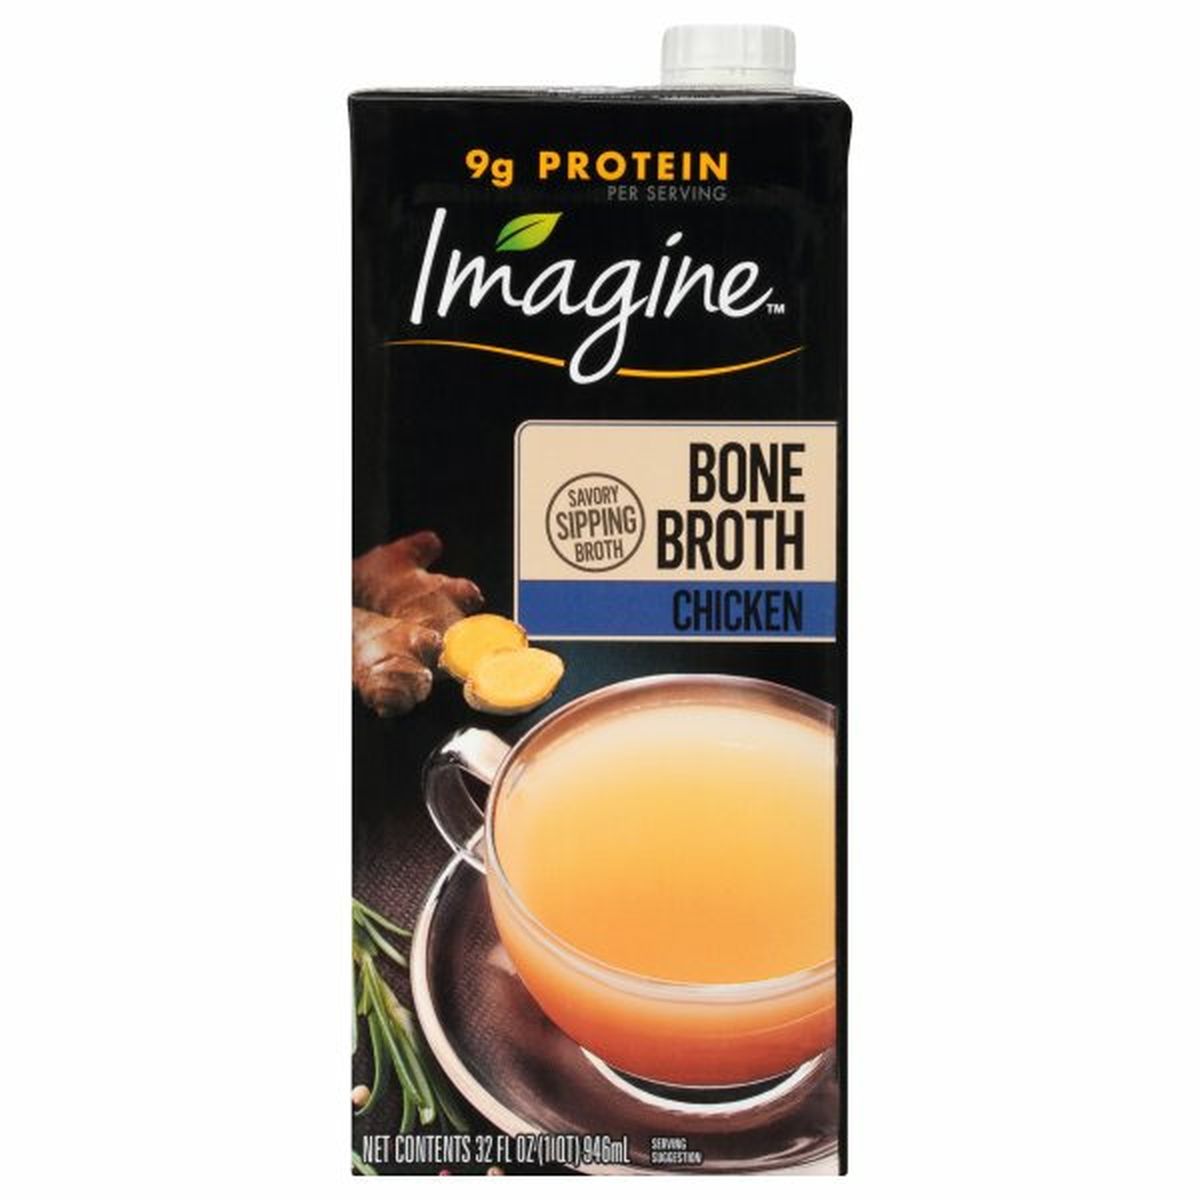 Calories in Imagine Bone Broth, Chicken